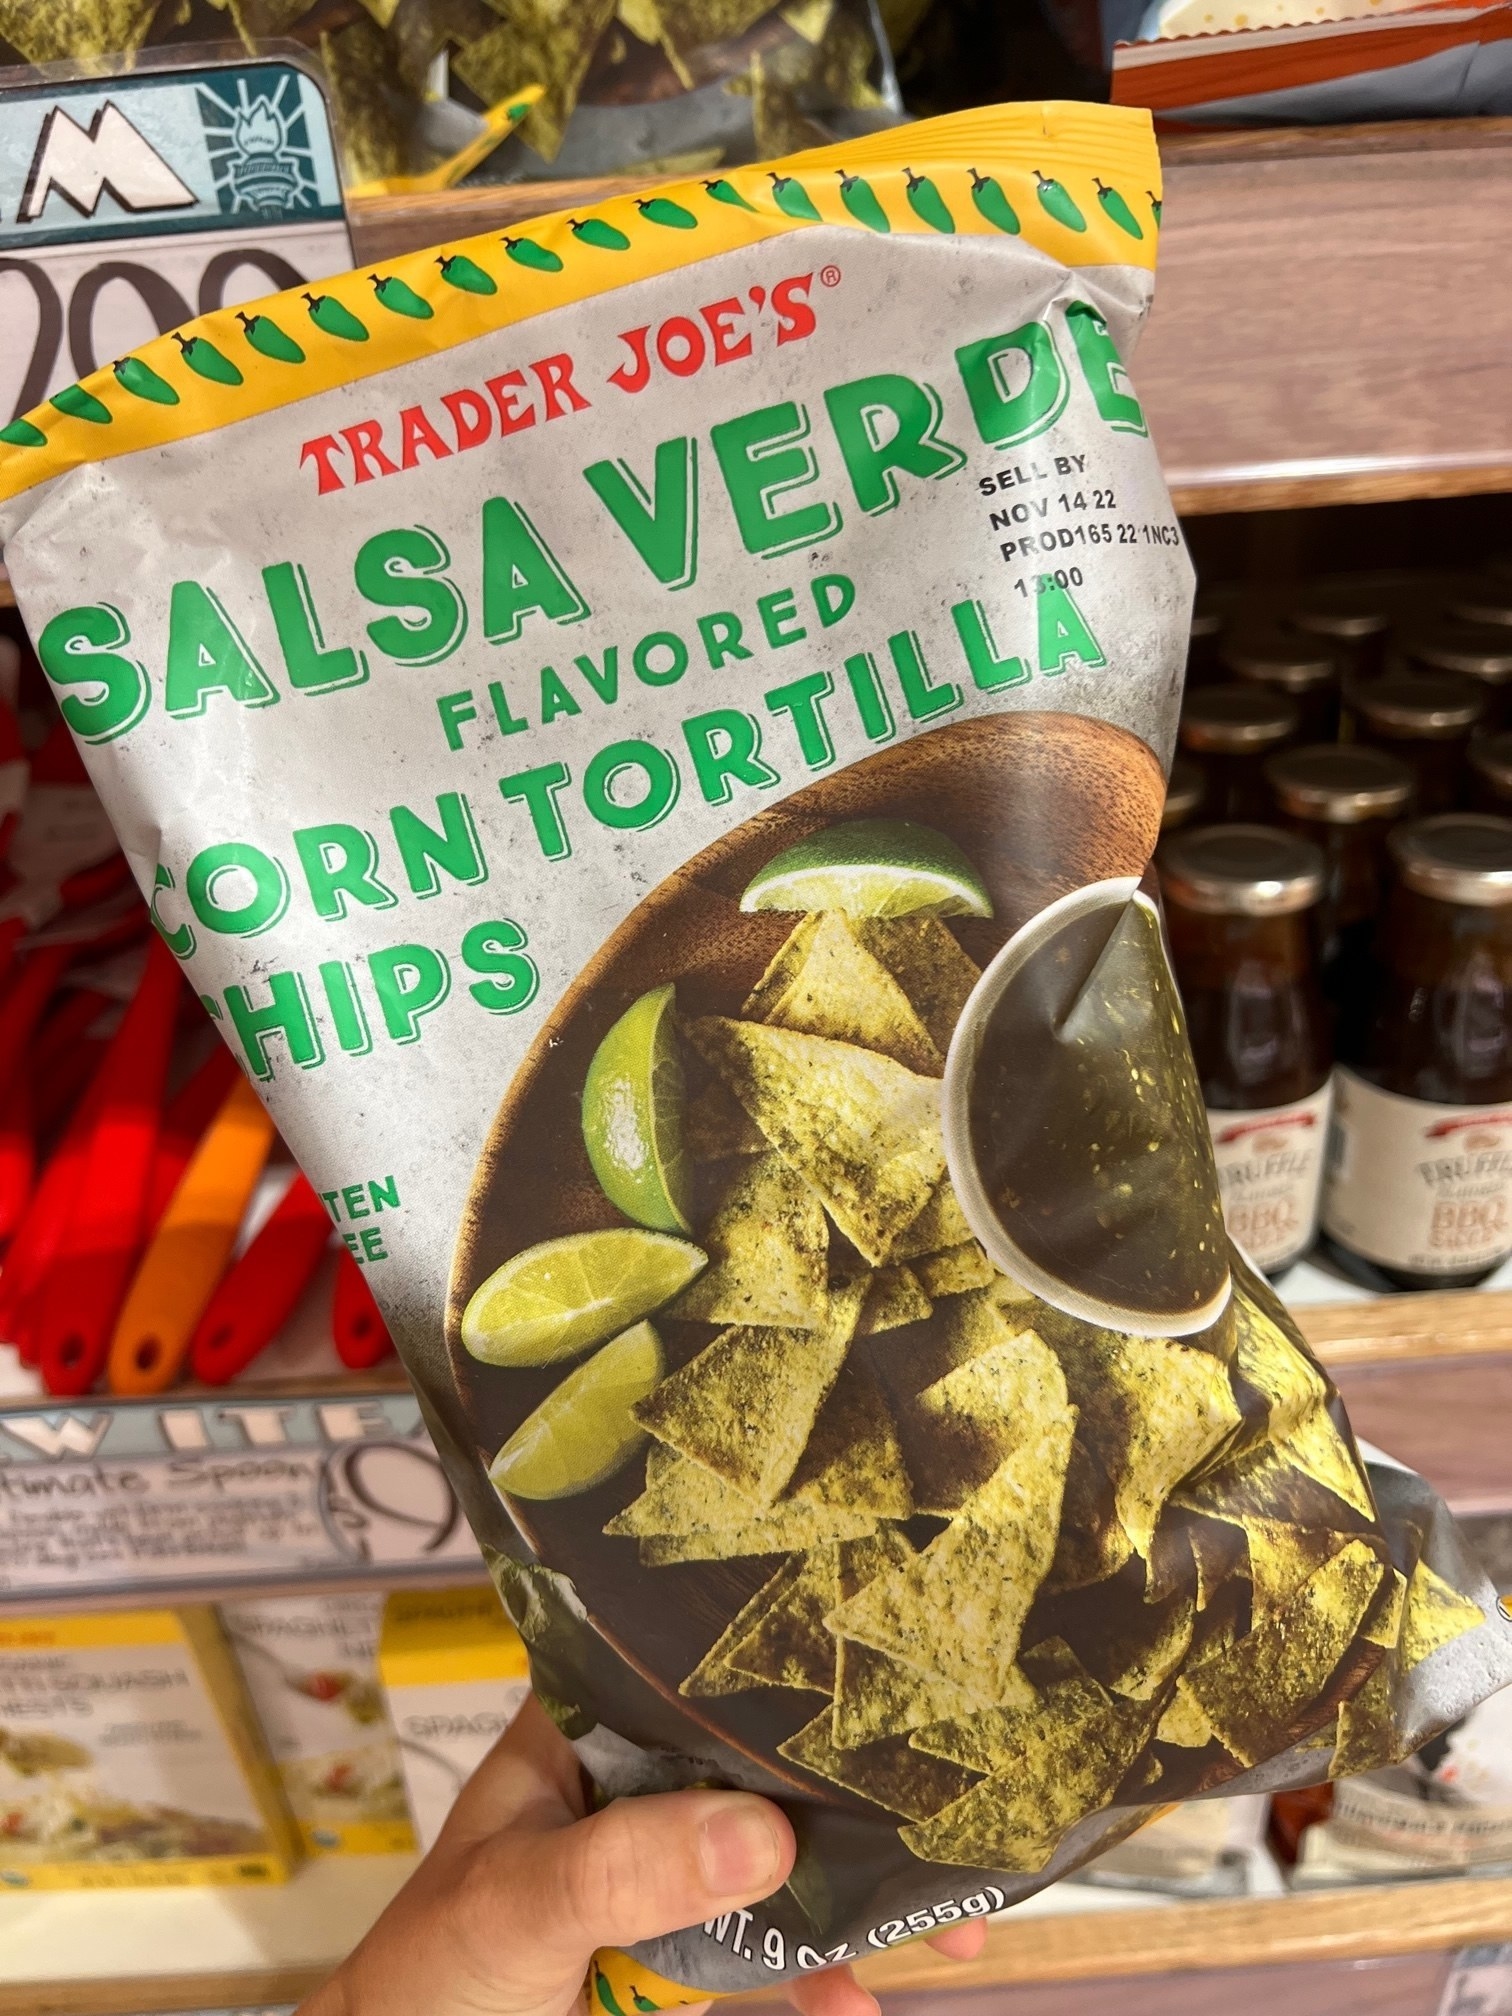 A bag of Salsa Verde Flavored Tortilla Chips.